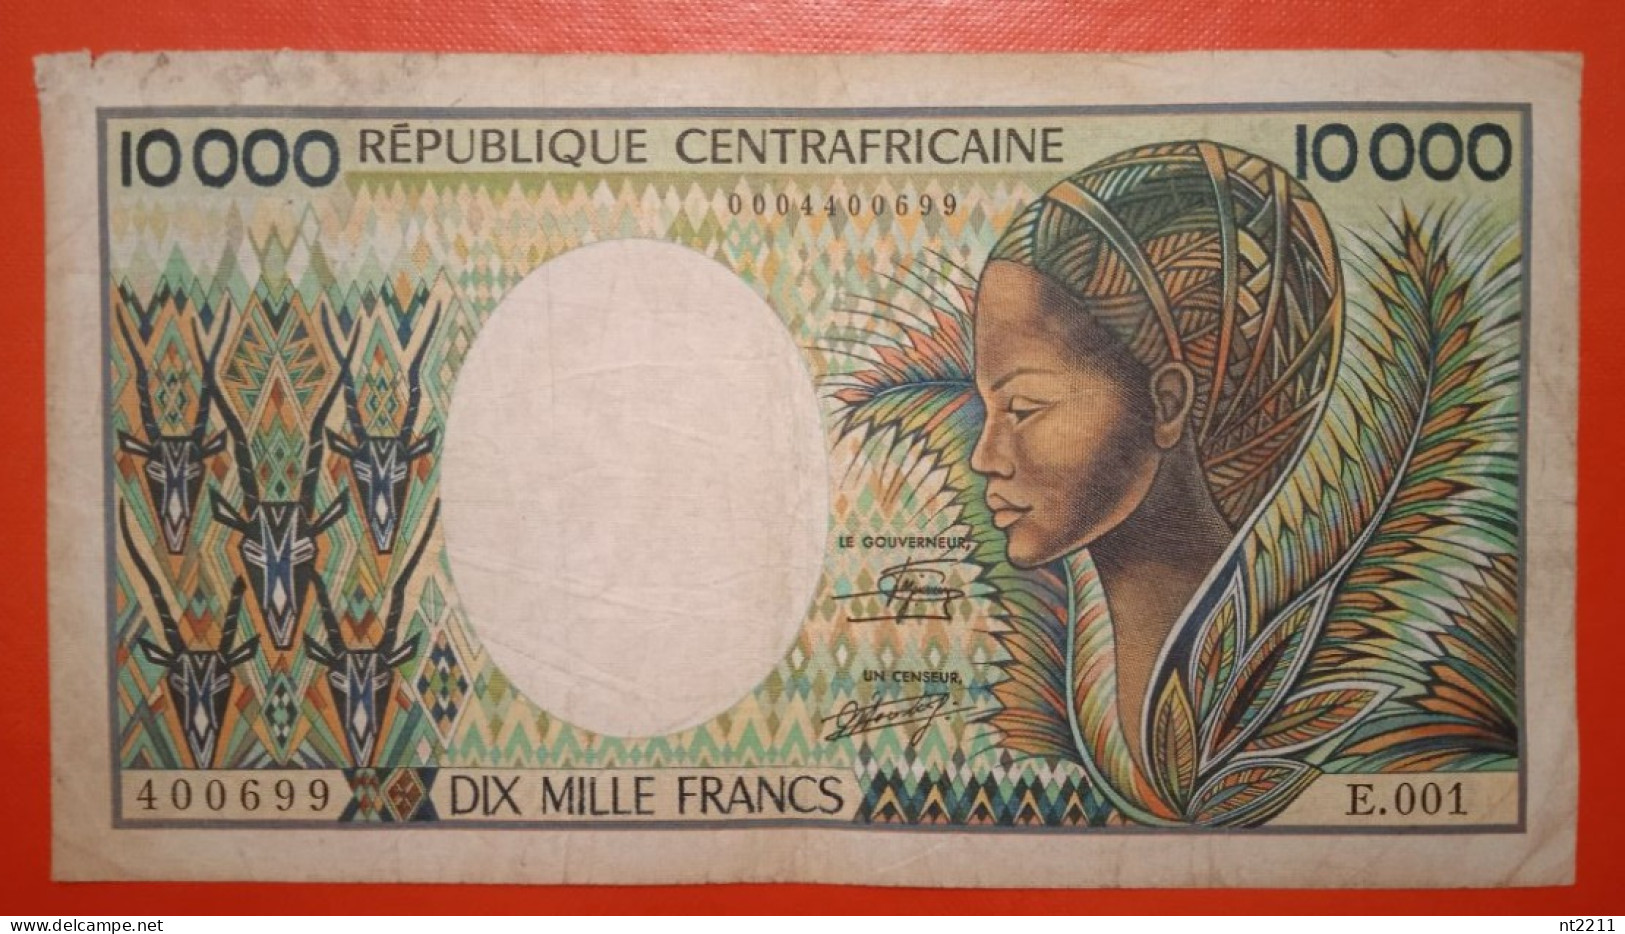 Banknote 10000 Francs Central African Republic - Repubblica Centroafricana